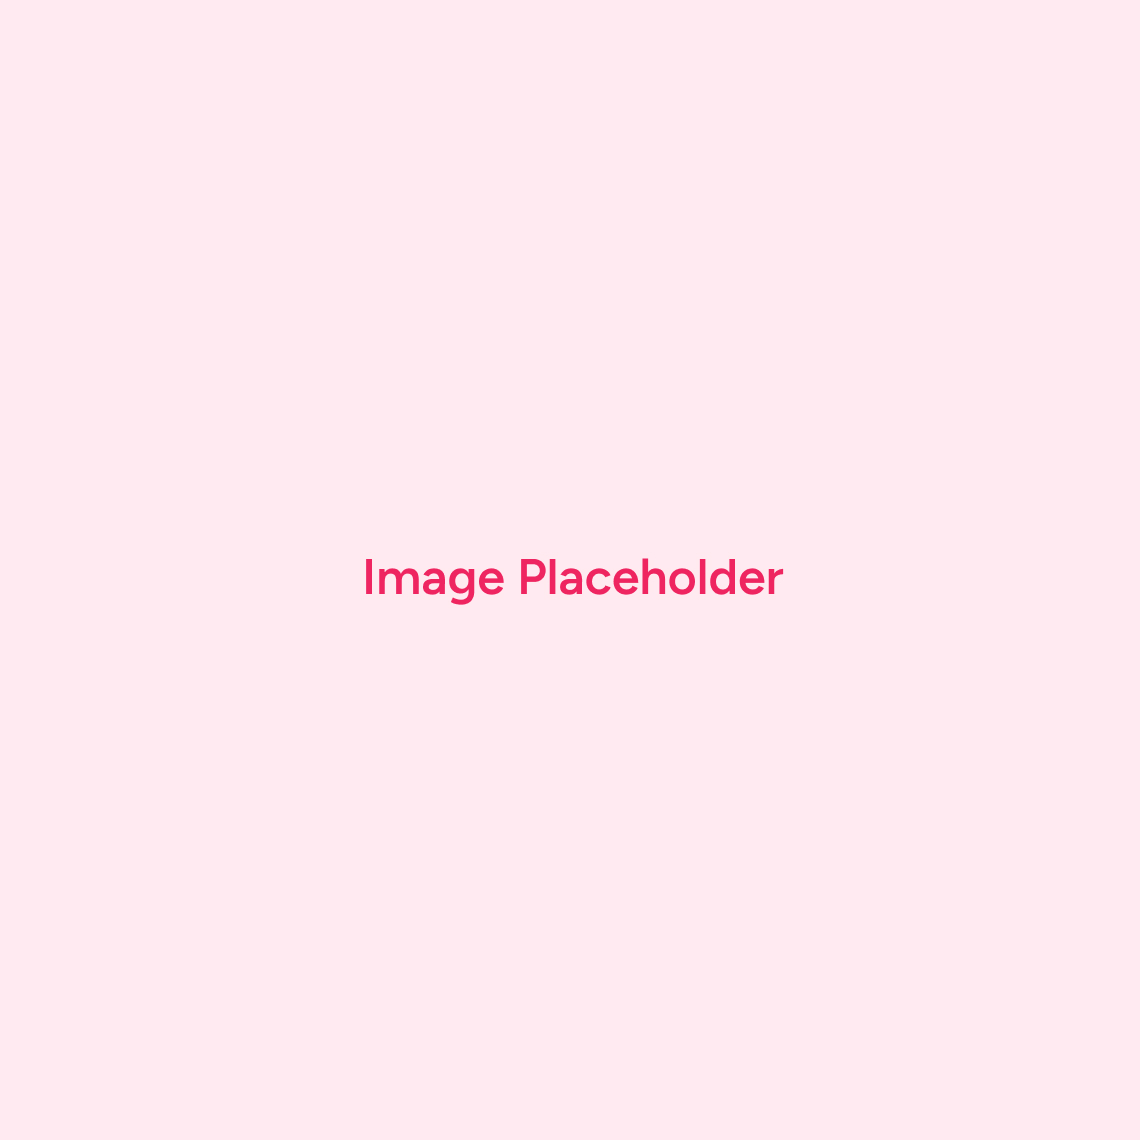 img-placeholder